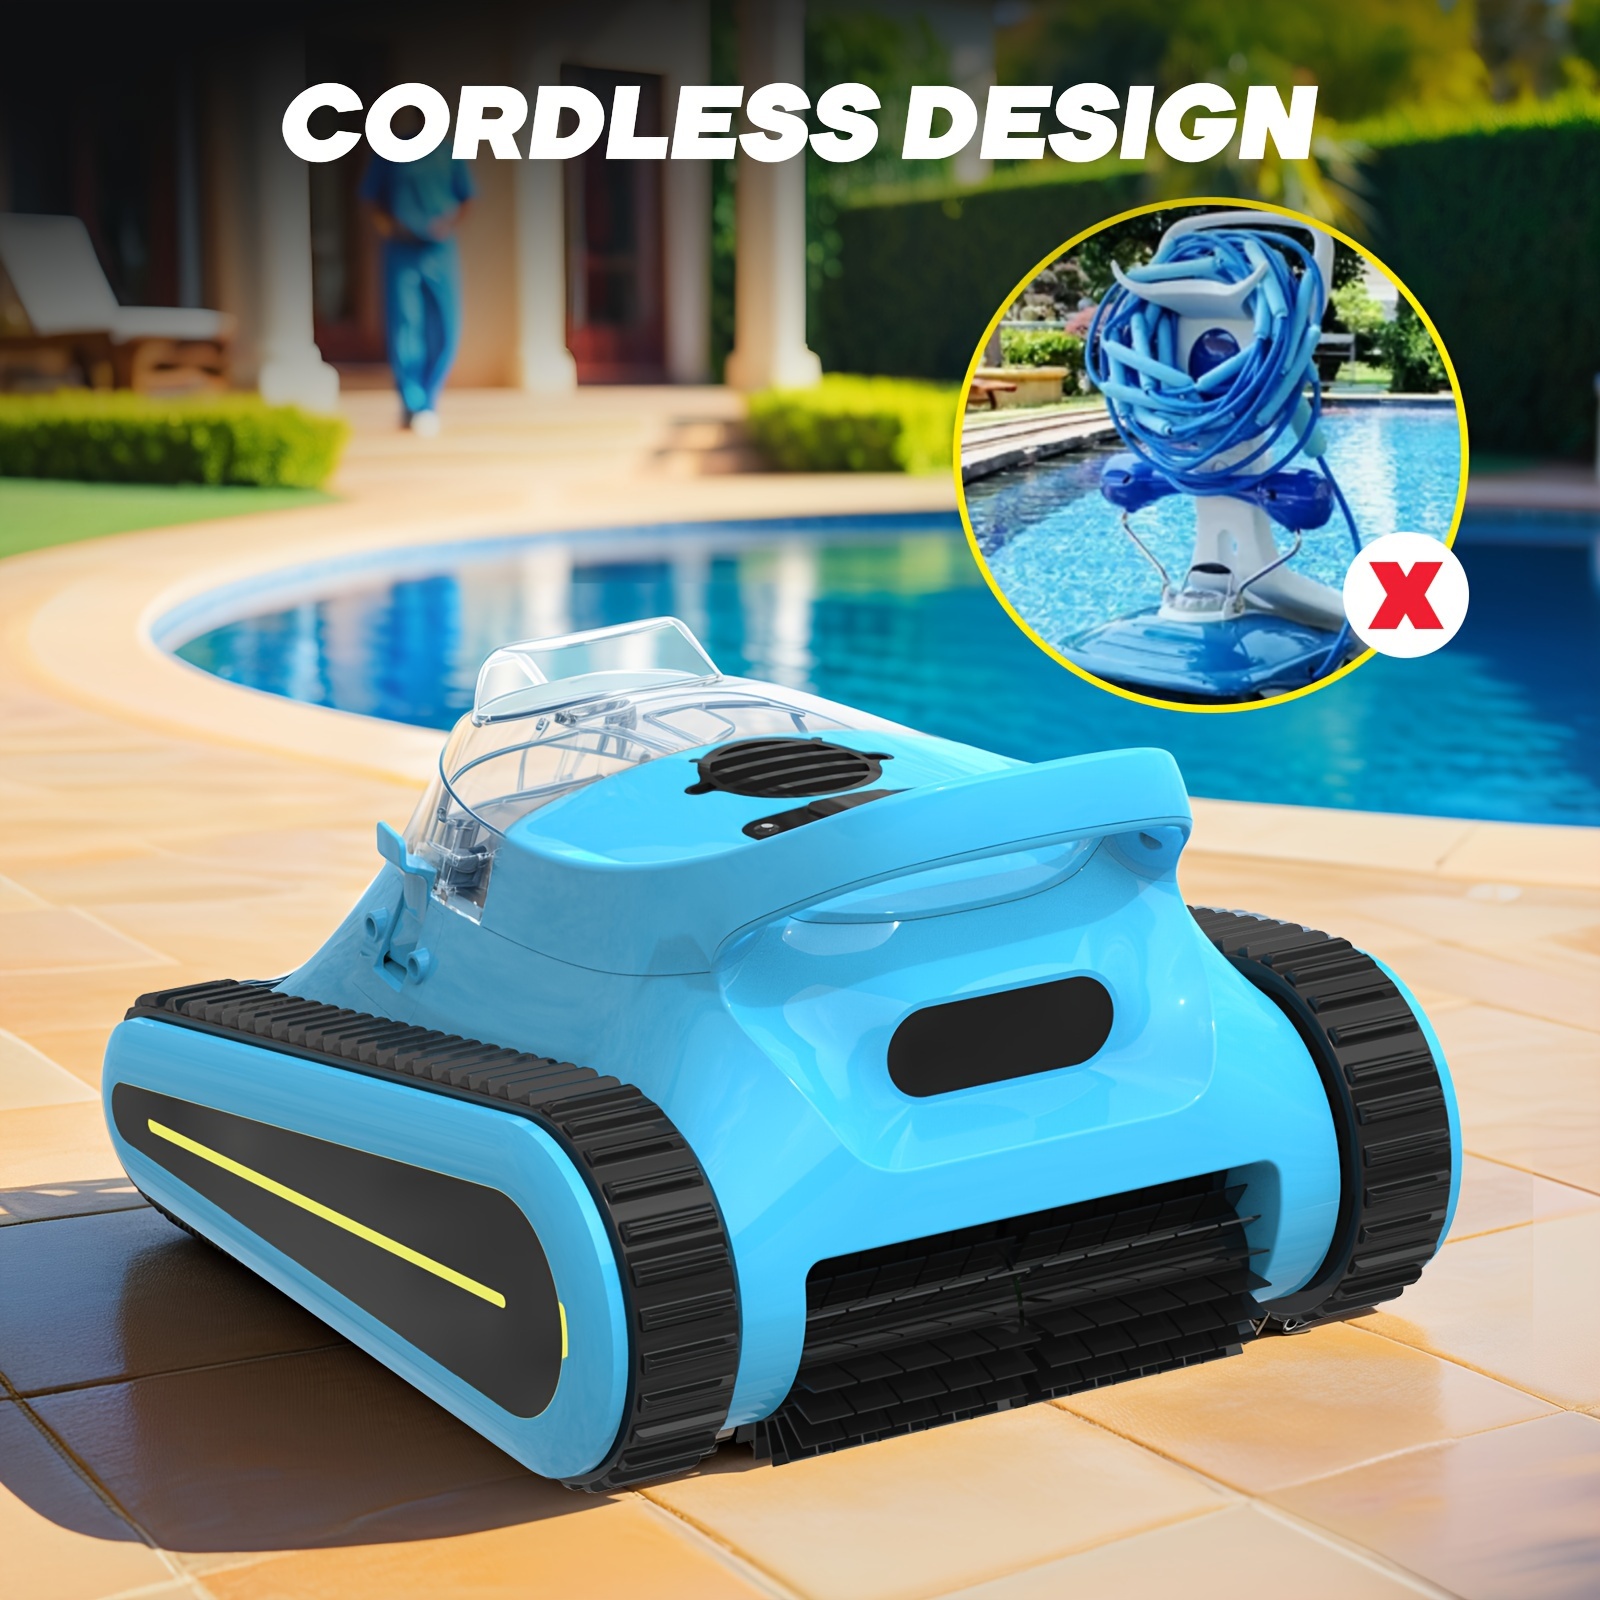 

(blue) Seauto Crab Robotic Pool Vacuum, Cordless Robotic Pool Cleaner For Inground Pools, Wall Climbing, Sonar Navigation